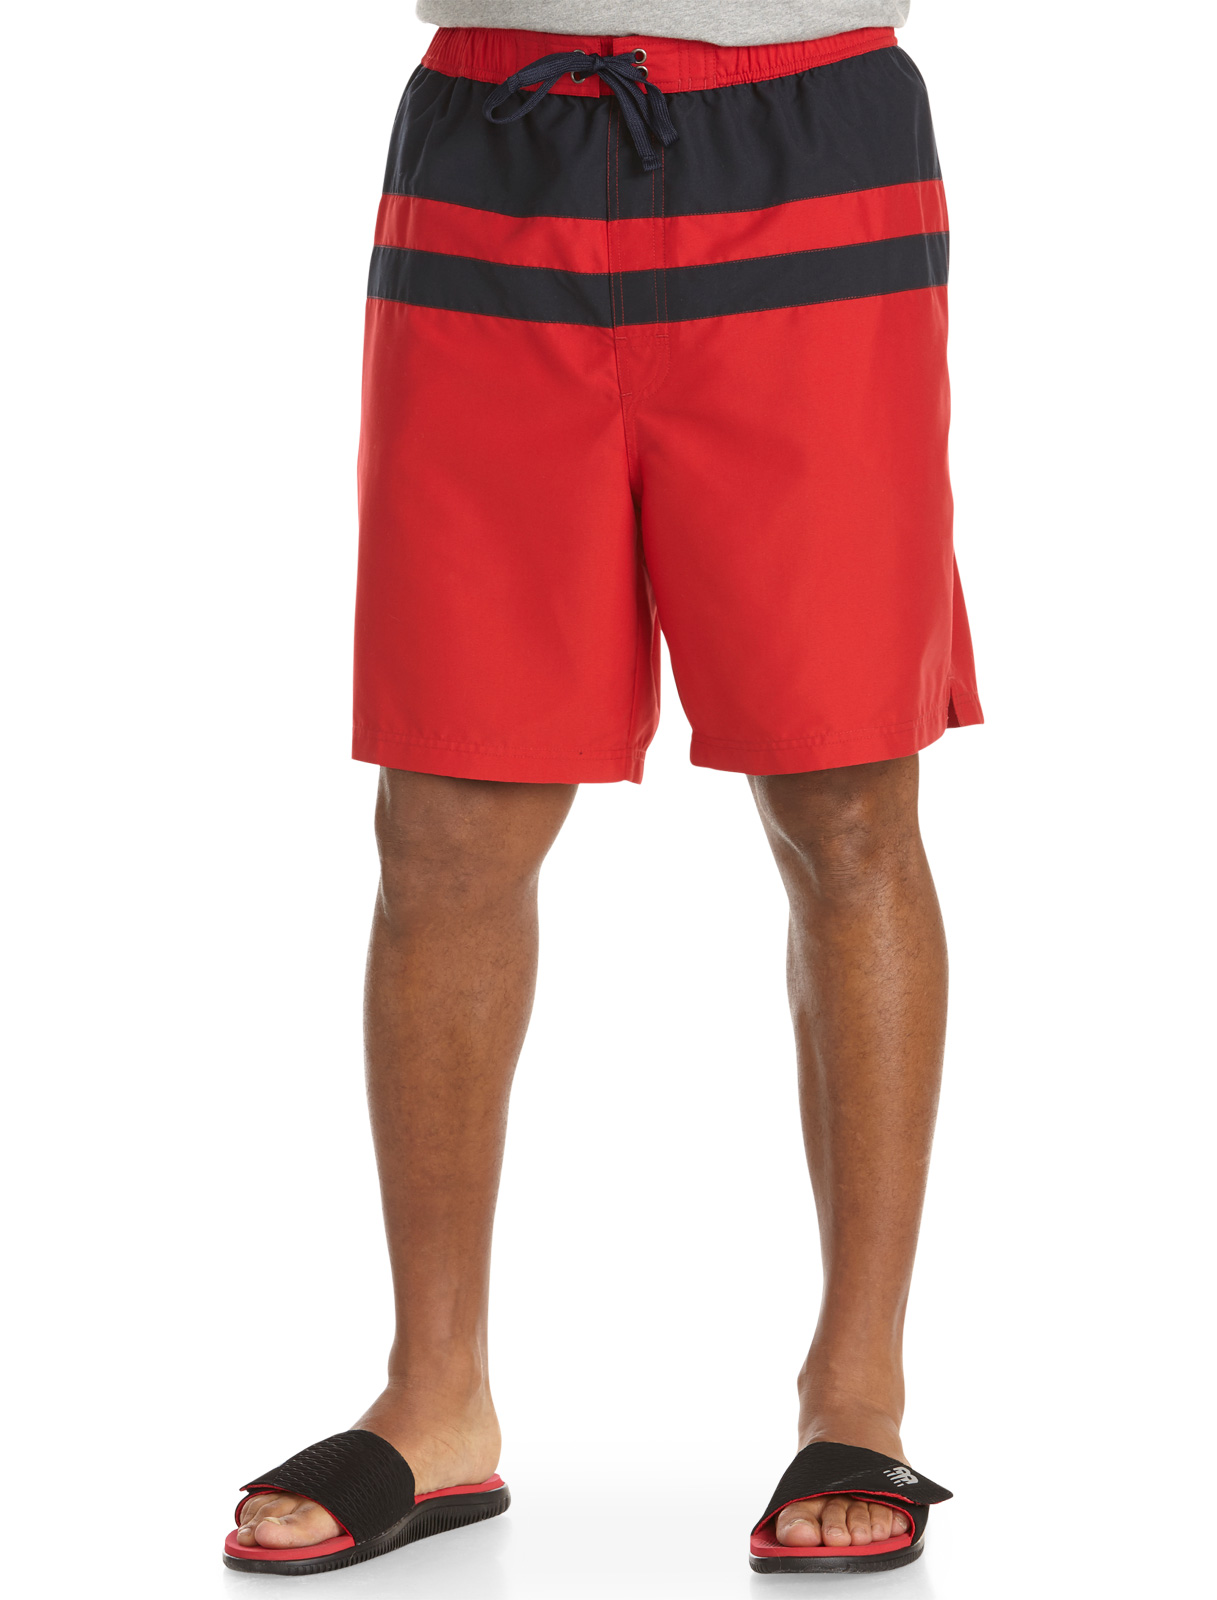 Harbor Bay Men's Big and Tall Stripe Board Shorts